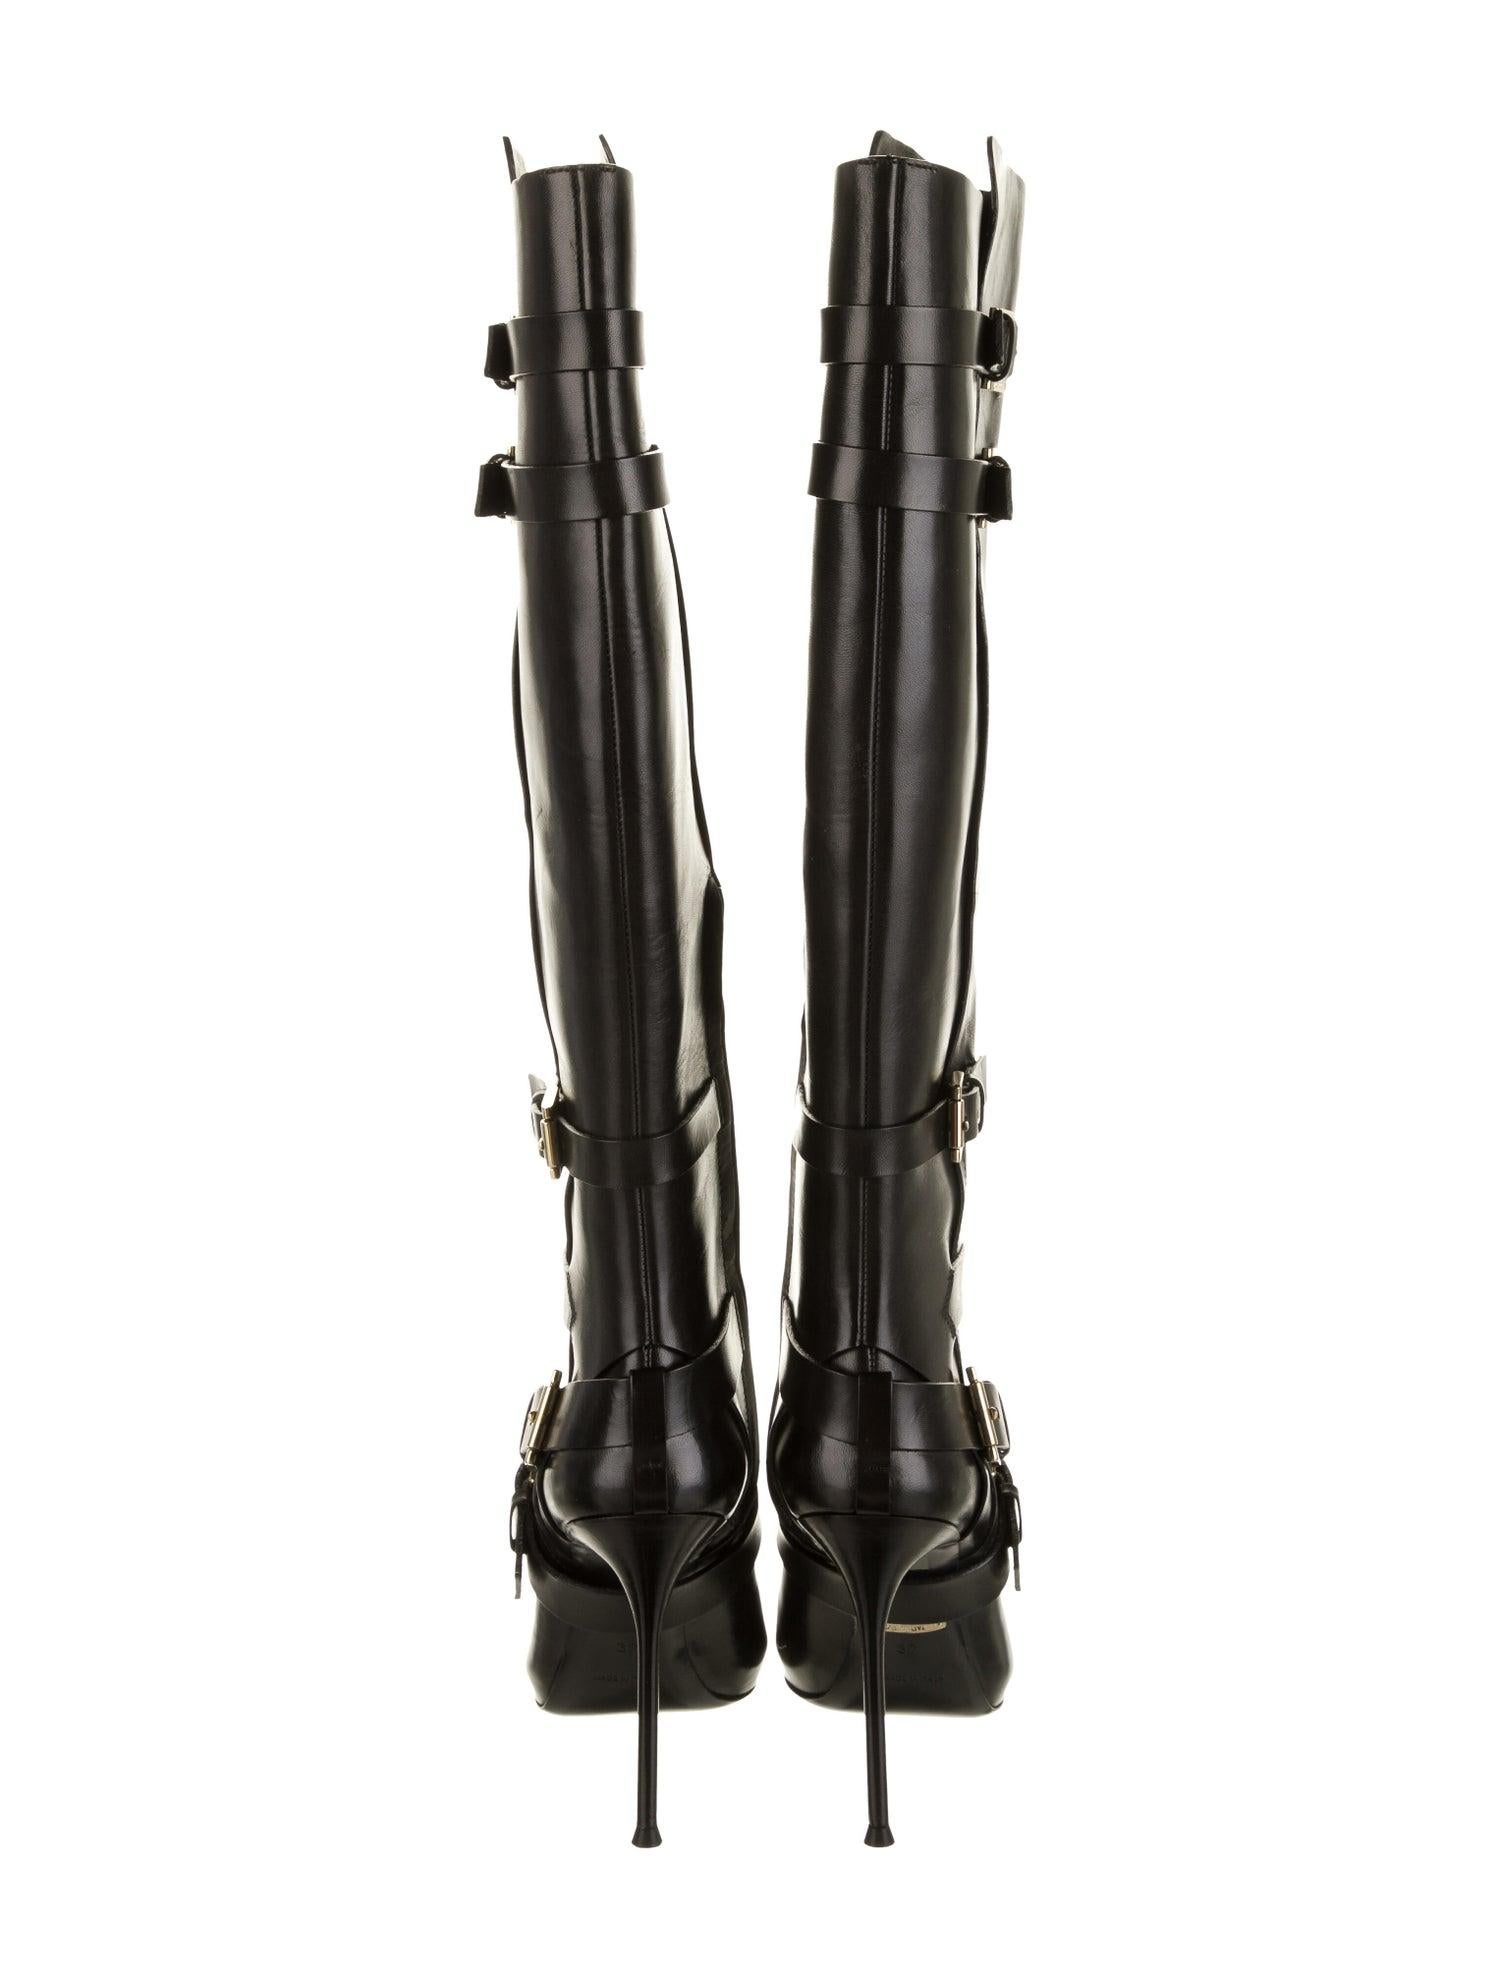 New Roberto Cavalli Buckle Stiletto Heel Black Leather Platform Boots 37 - US 7 For Sale 2